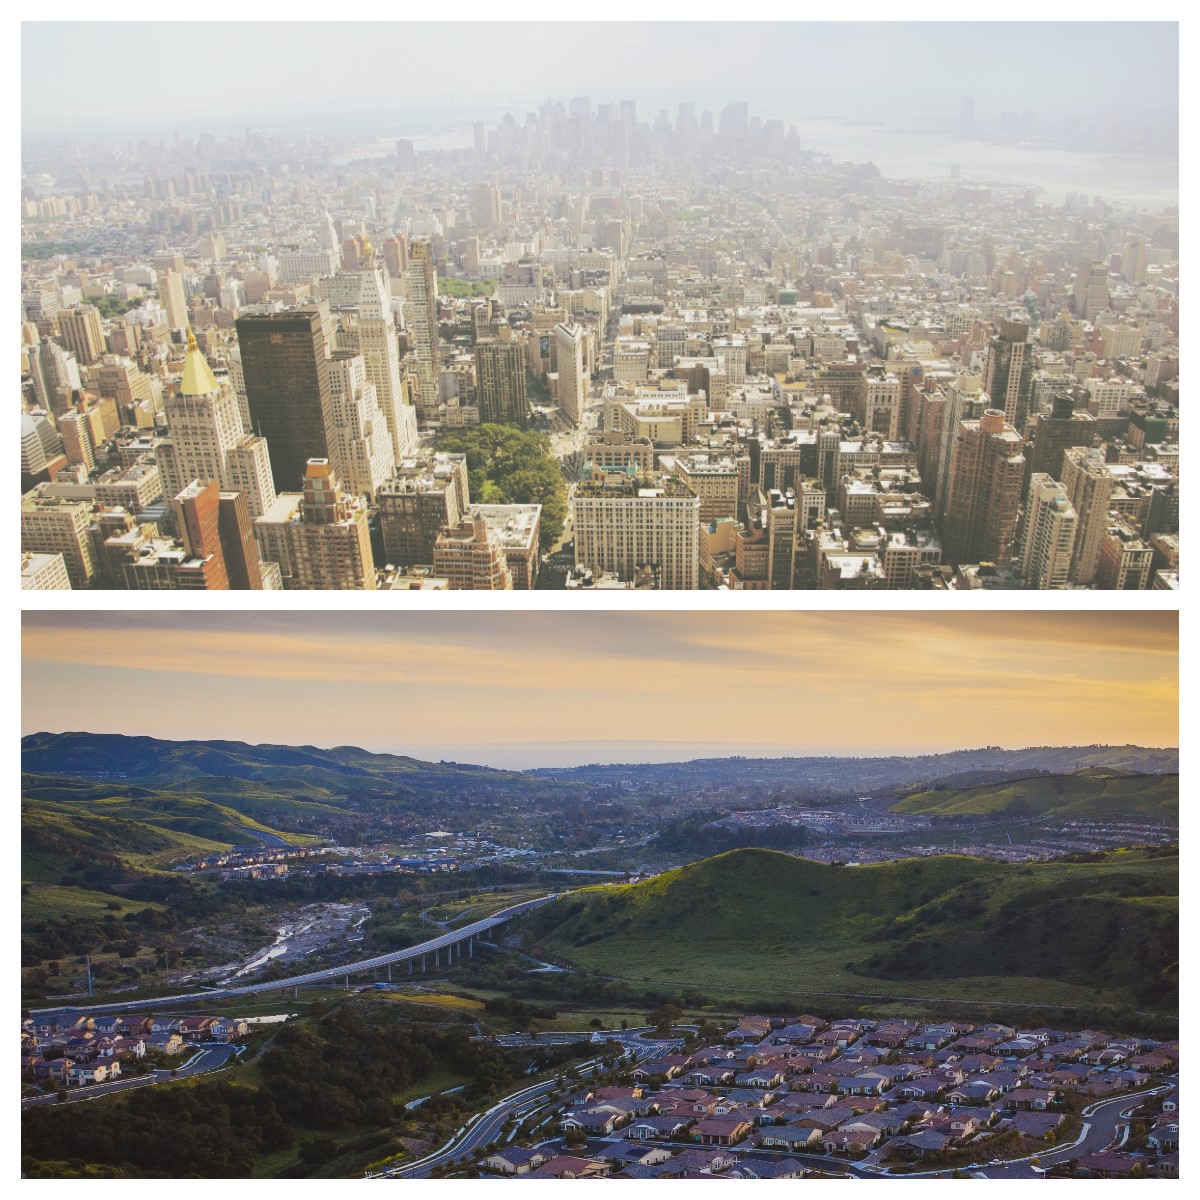 cities vs suburbs whats better